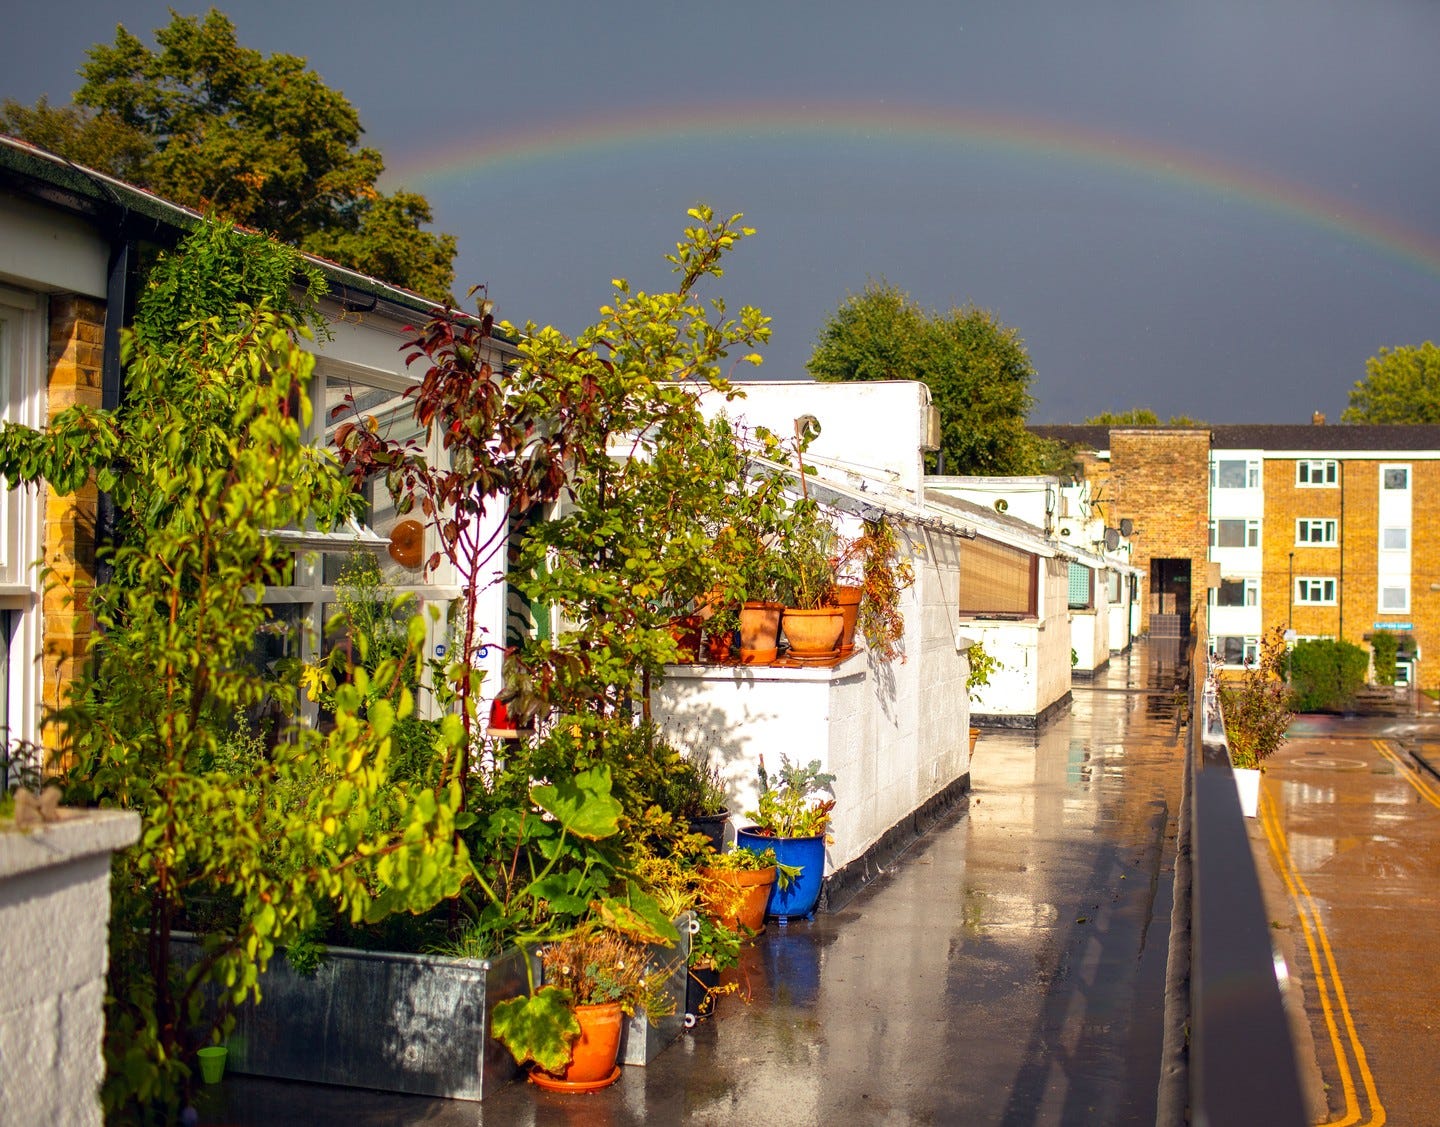 Vanbrugh Park Estate gardens with rainbow in sky